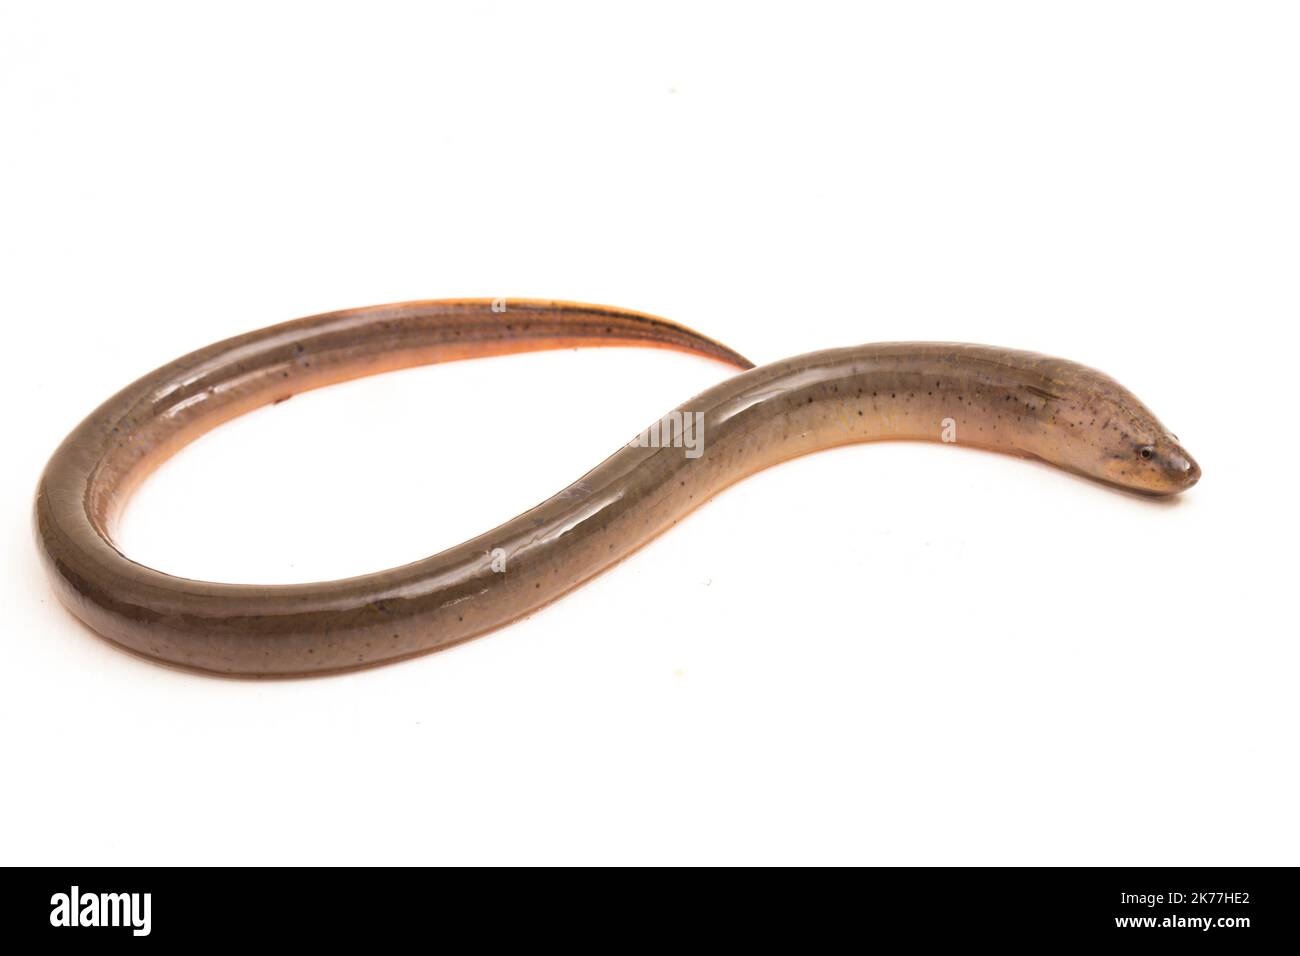 Asian swamp eel (Monopterus albus) isolated on white background Stock Photo